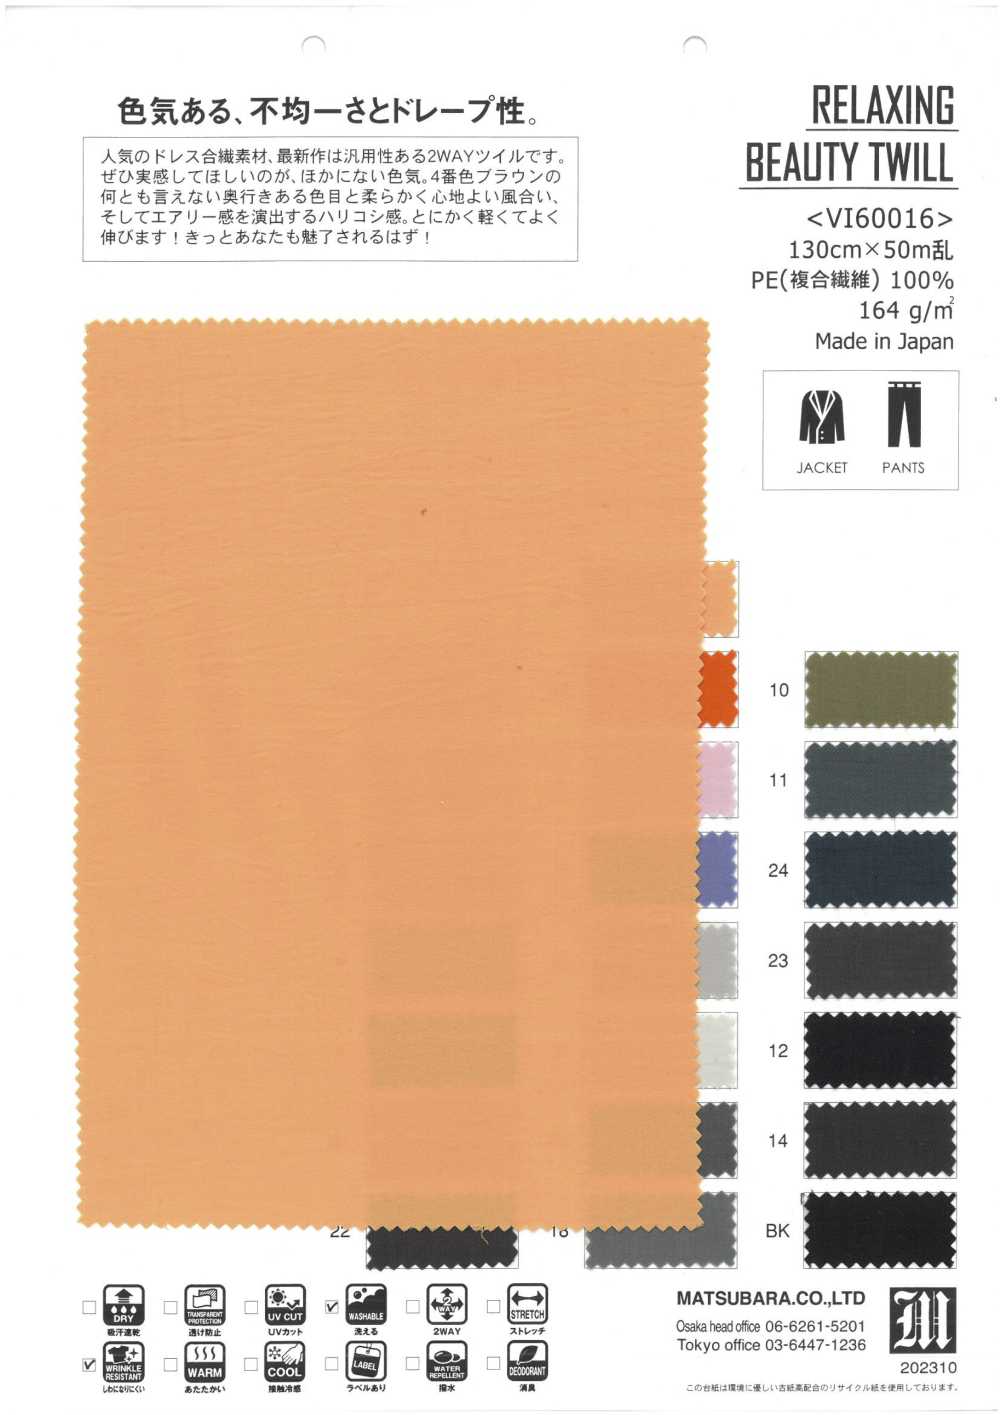 VI60016 RELAXING BEAUTY TWILL[Textile / Fabric] Matsubara